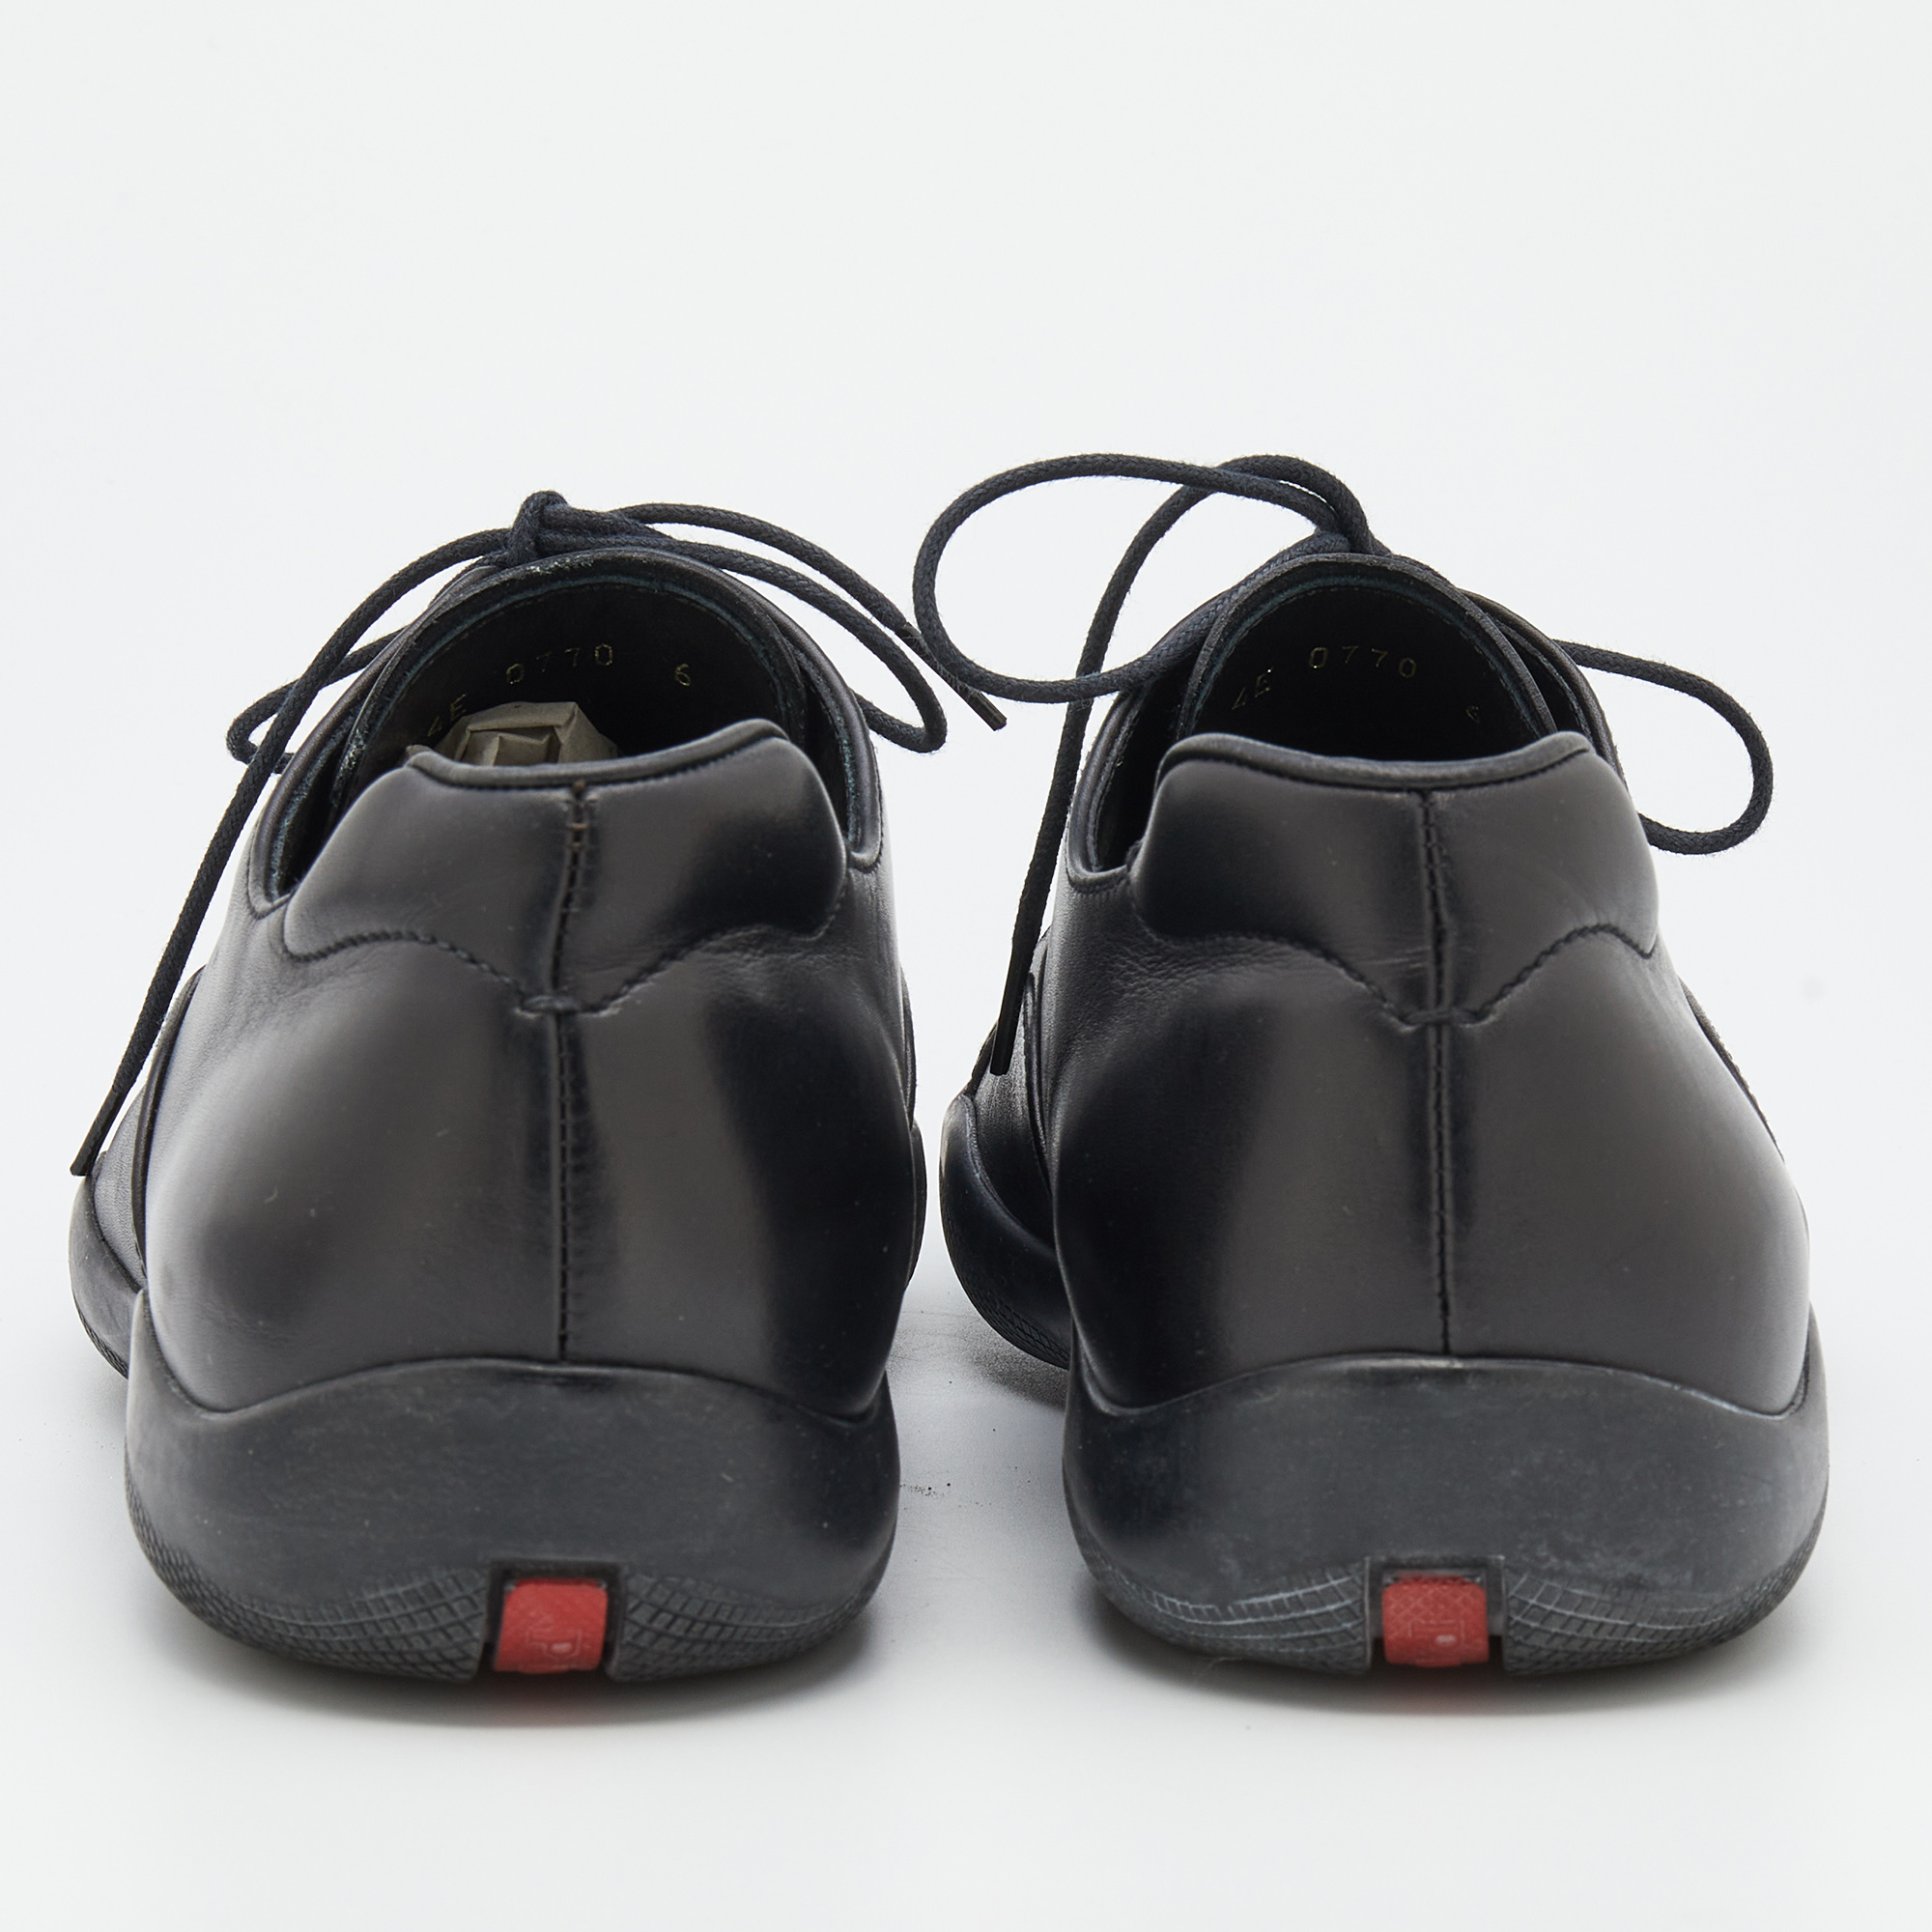 Prada Sport Black Leather Low Top Sneakers Size 40